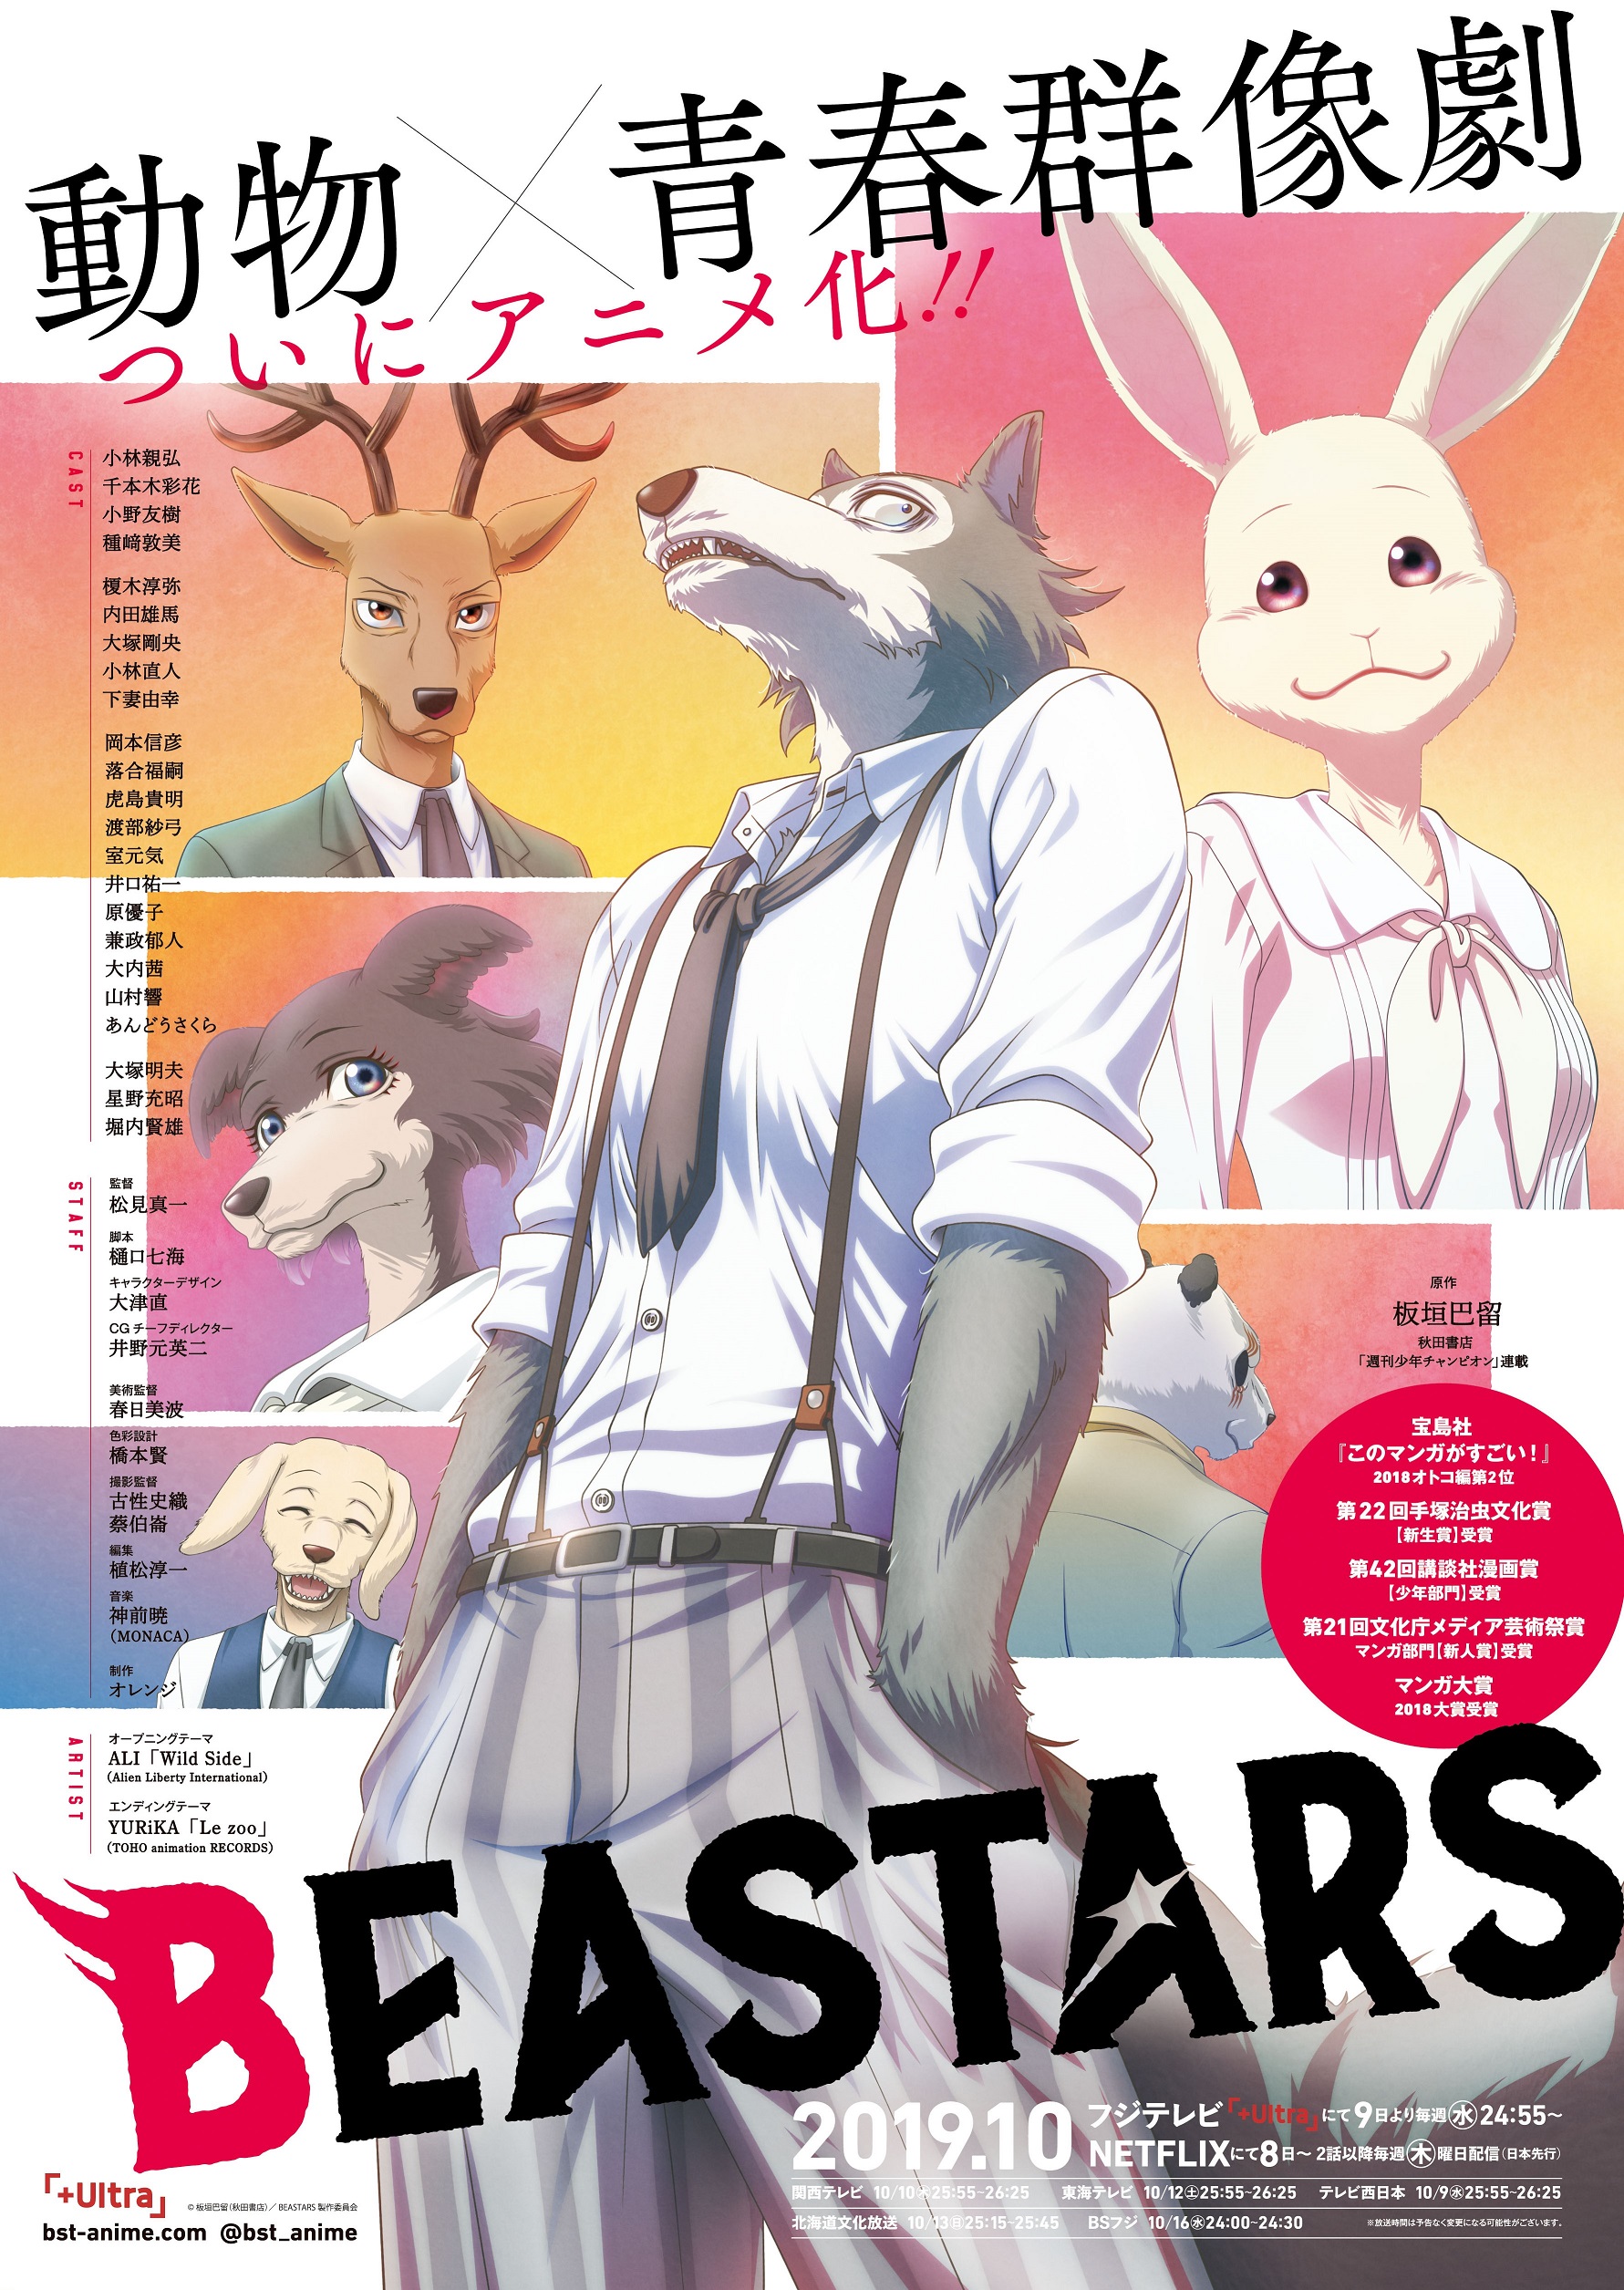 Sinopsis Beastars Season 2, Serial Anime yang Tayang di Netflix-demhanvico.com.vn